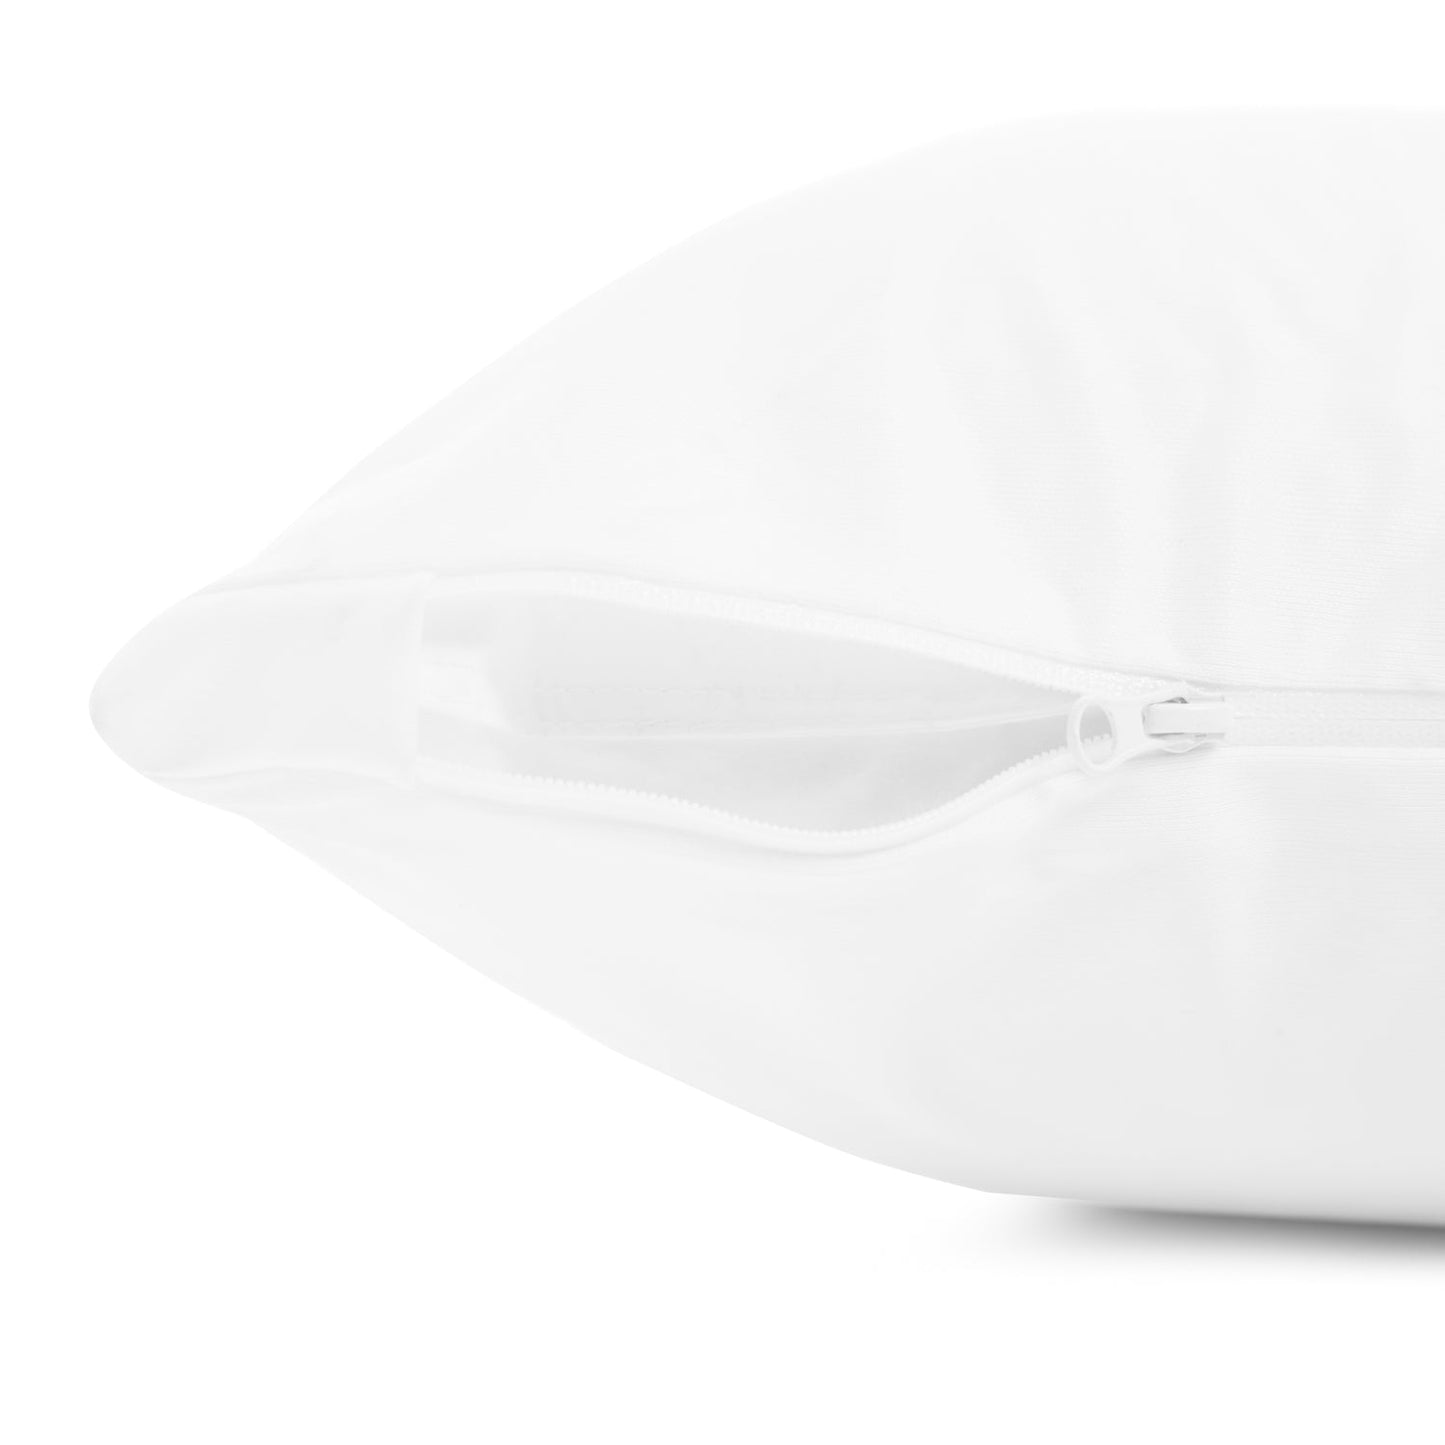 Sleep Tite Encase HD Mattress Protector - Jura Sleep